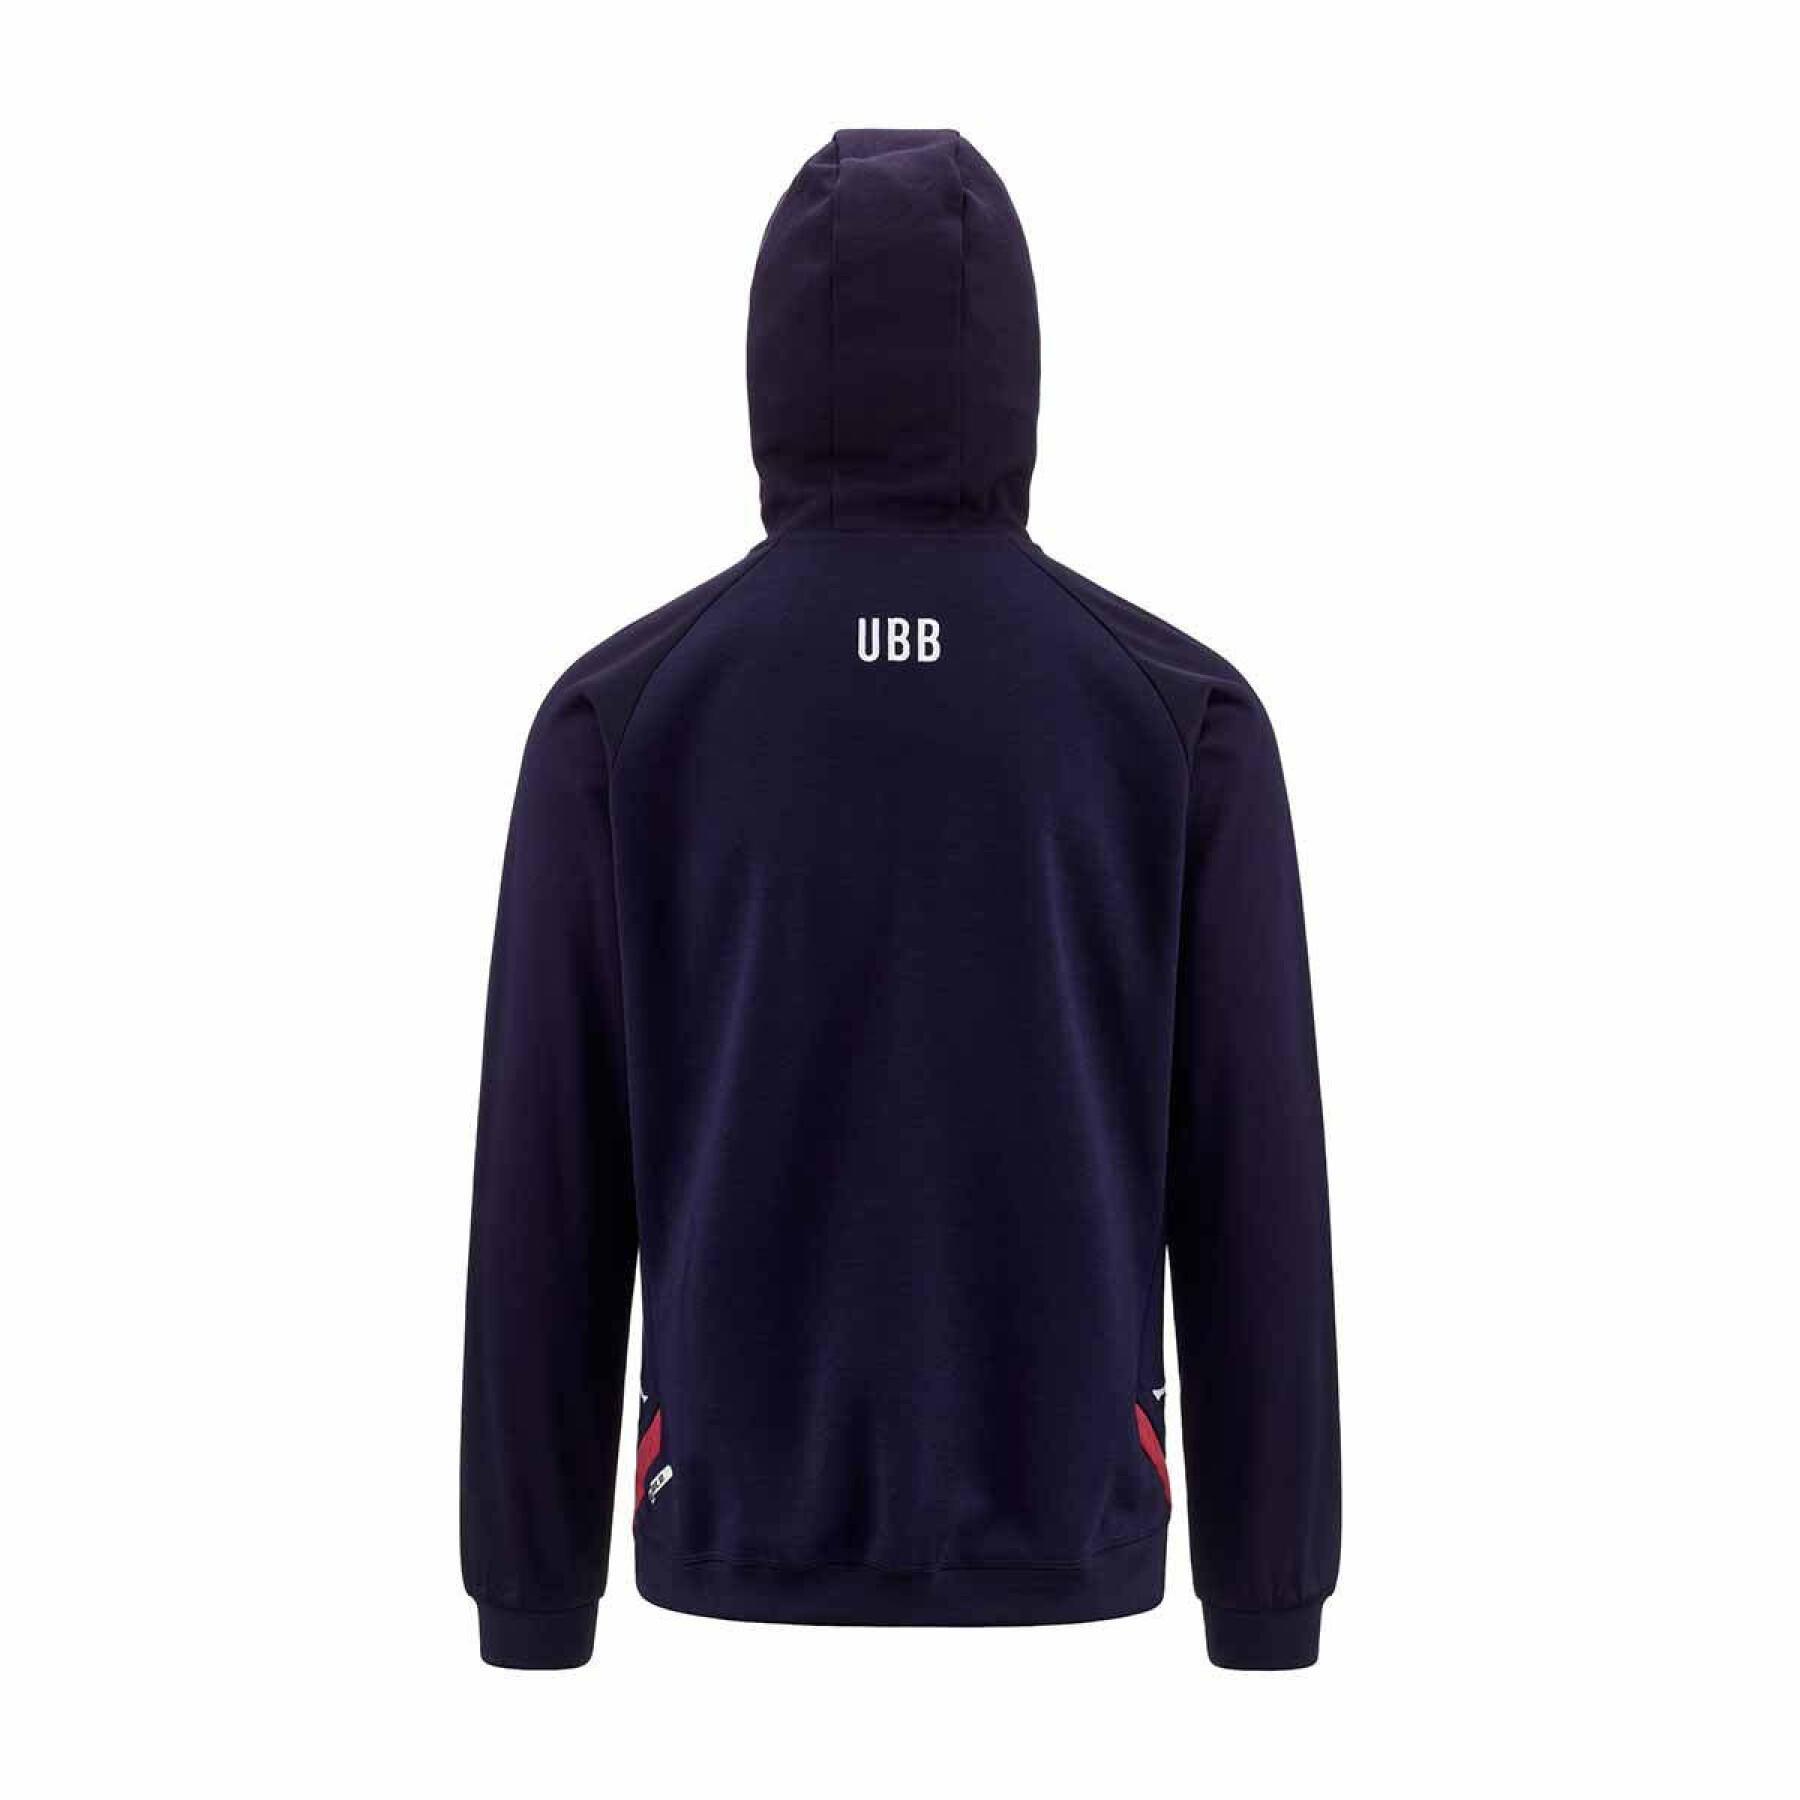 Hooded sweatshirt for kids Union Bordeaux-Bègles 2022/23